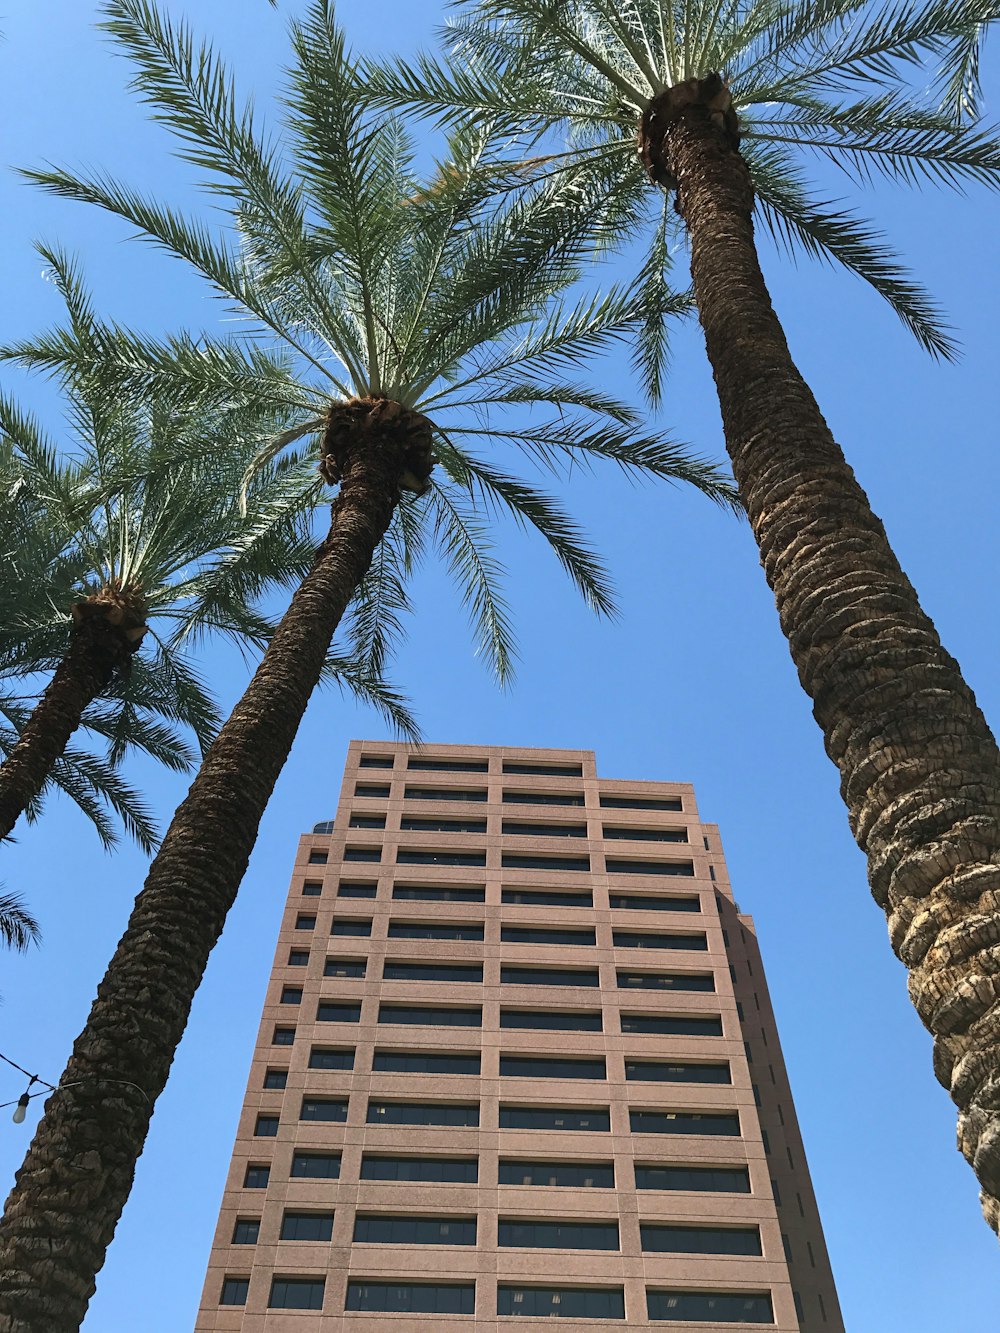 palm trees near building